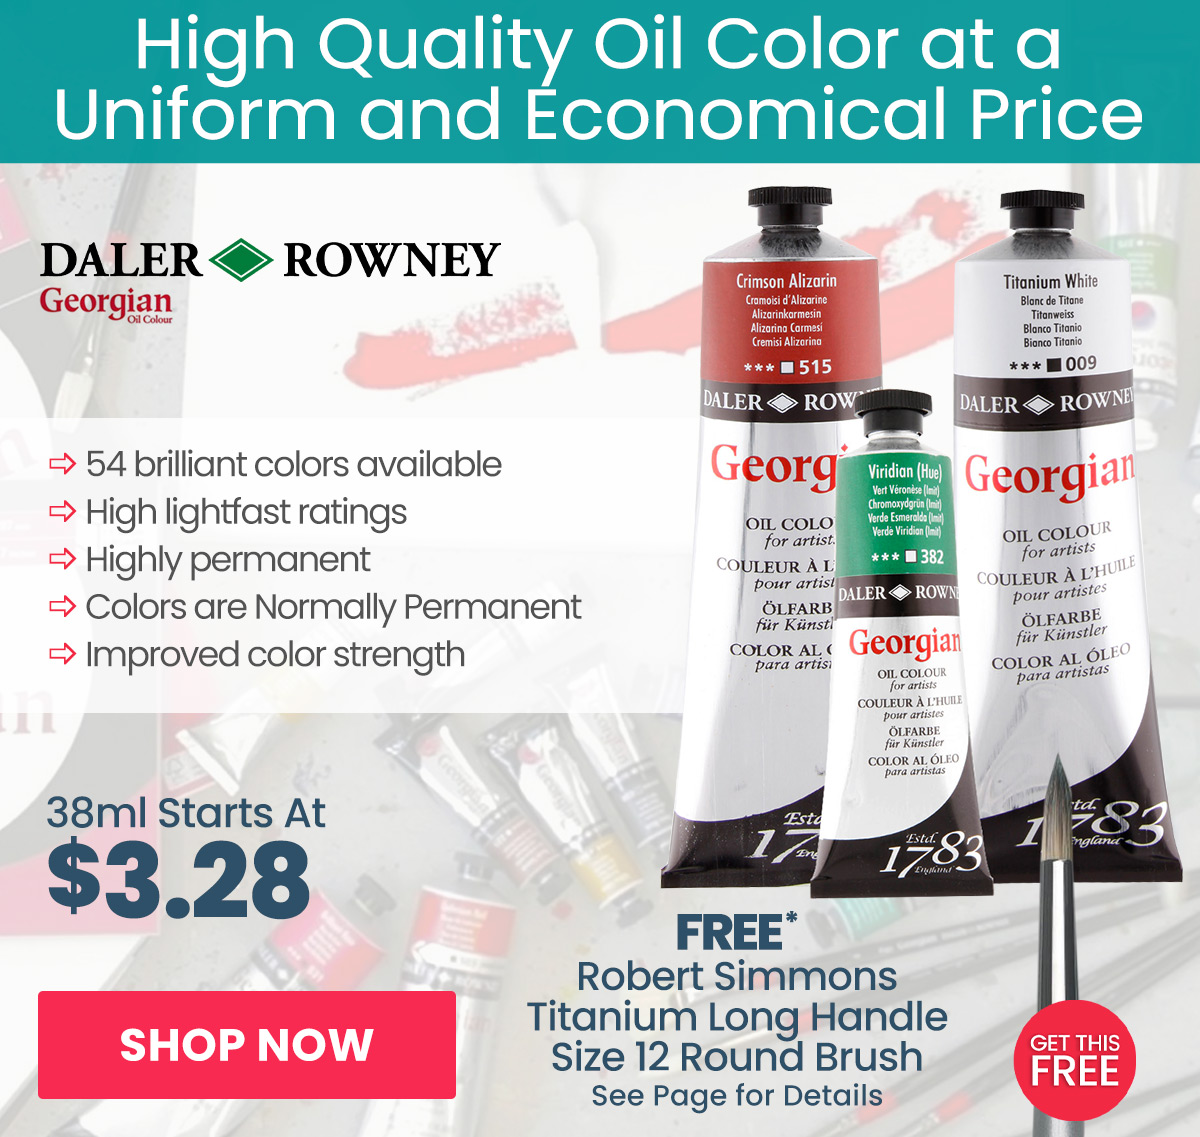 Daler-Rowney Georgian Oil Colors - Free Size 12 Round Brush